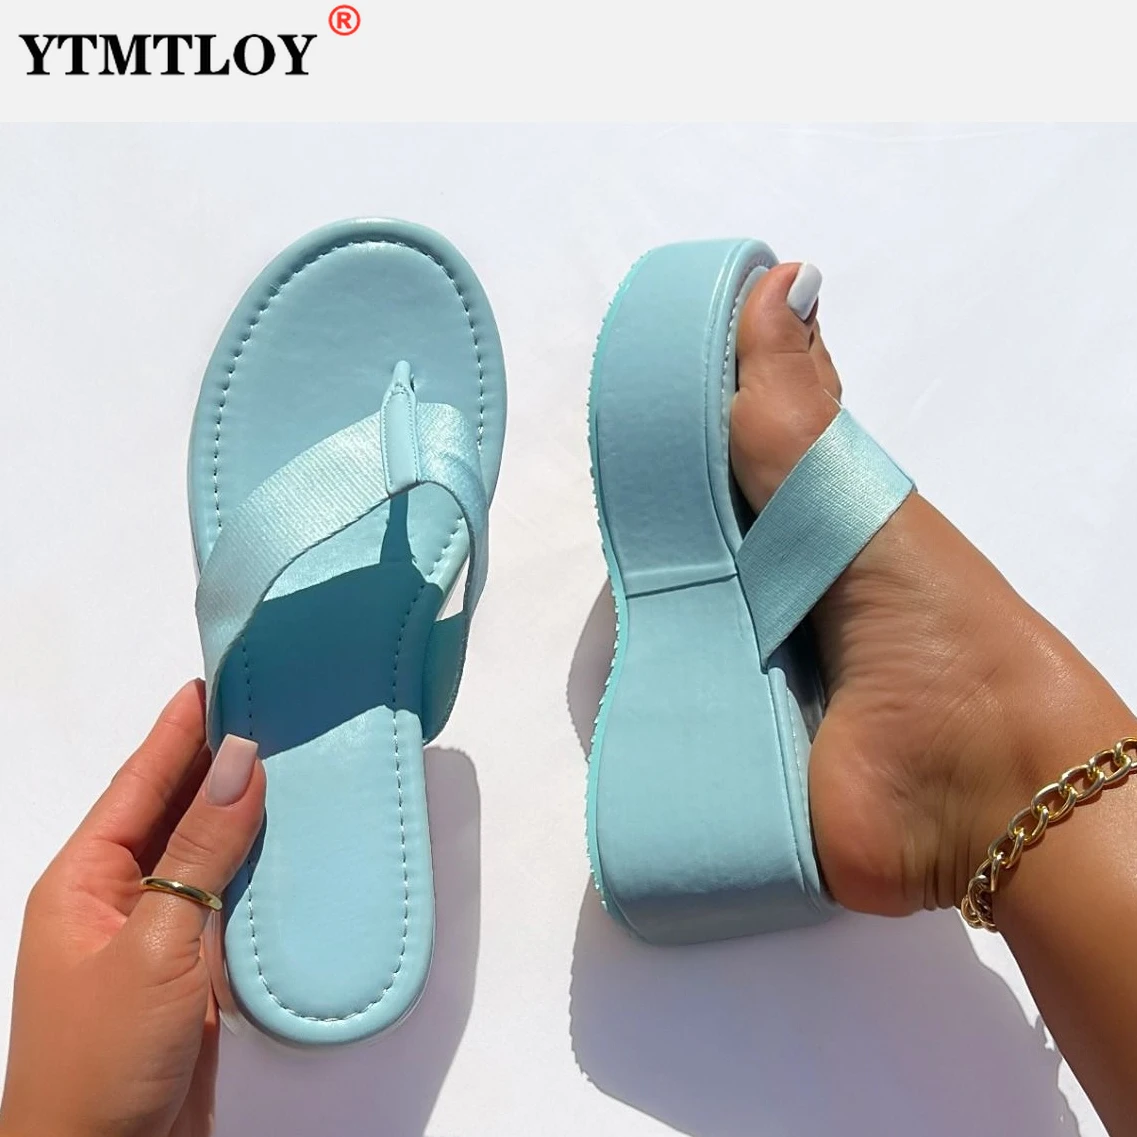 

Platform Wedges Sandals For Women Flip Flop Ankle Lace Up Metal Design Fashion Roman Retro High Heels Comfy Casual Shoes 5